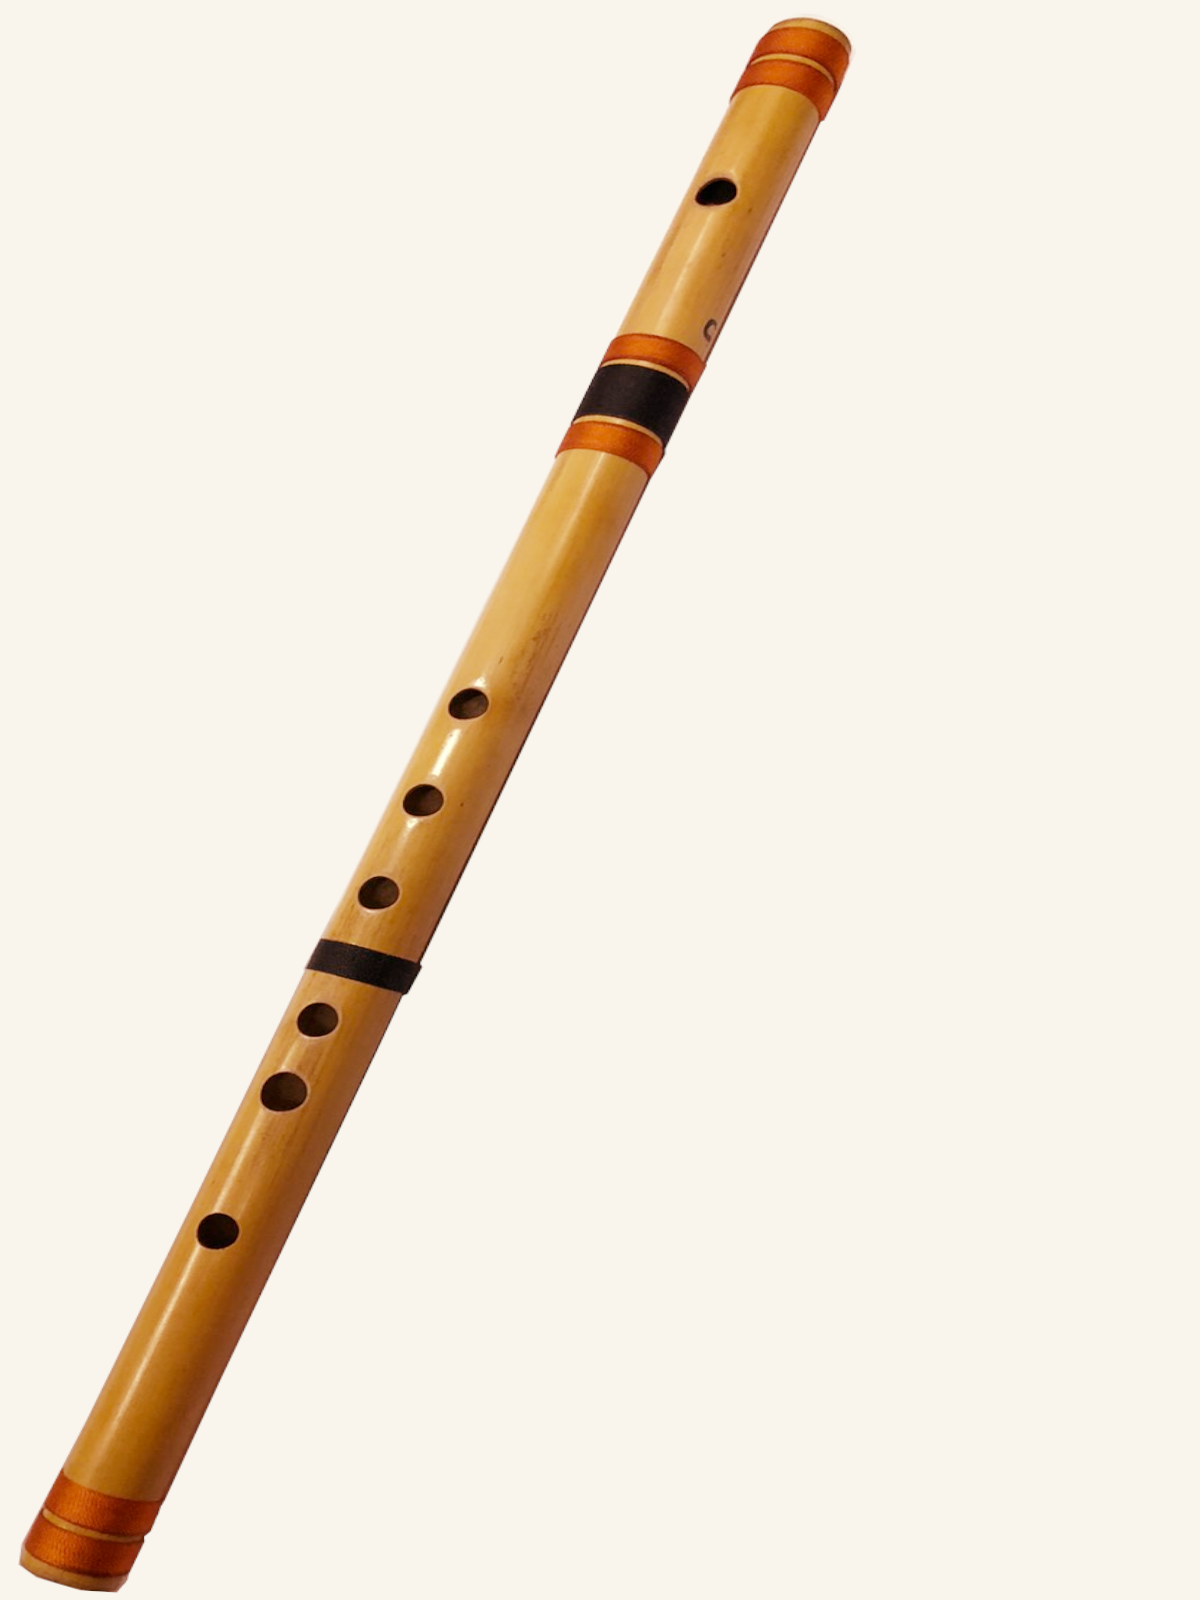 CDEFG Professional flute - Nepal Music Gallery